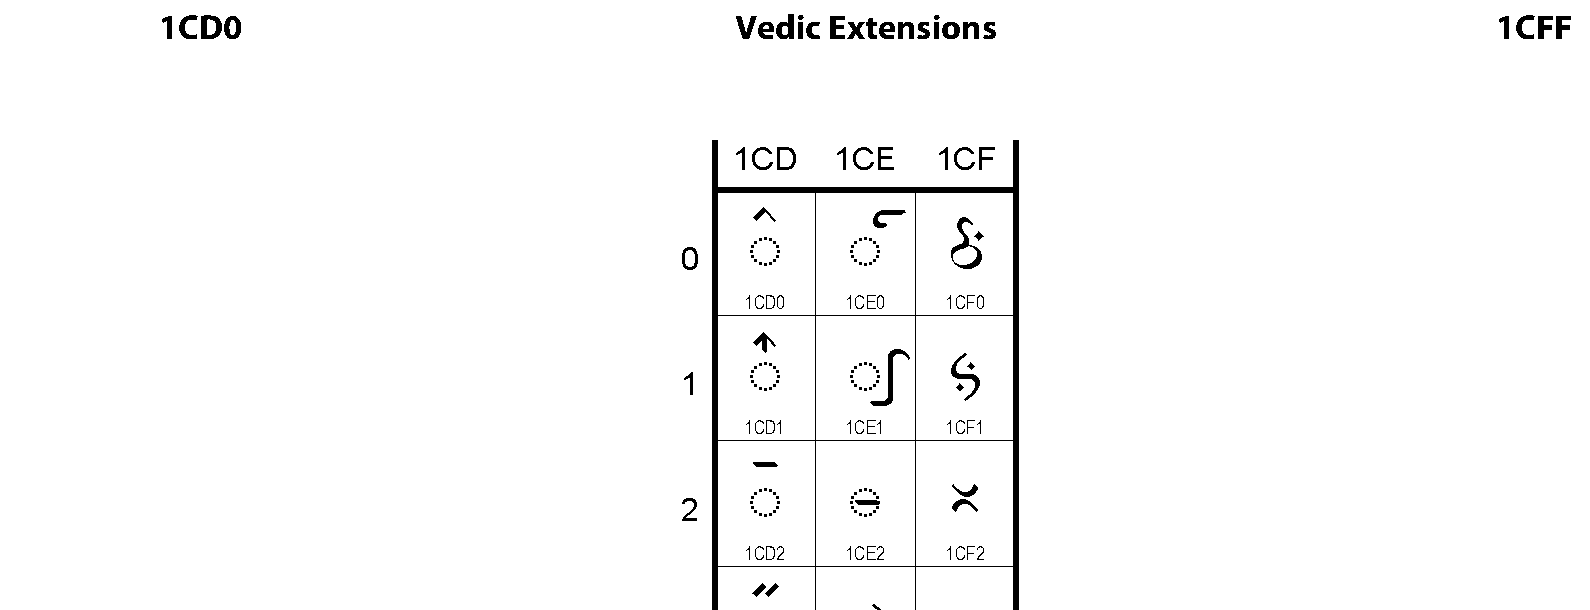 Unicode - Vedic Extensions